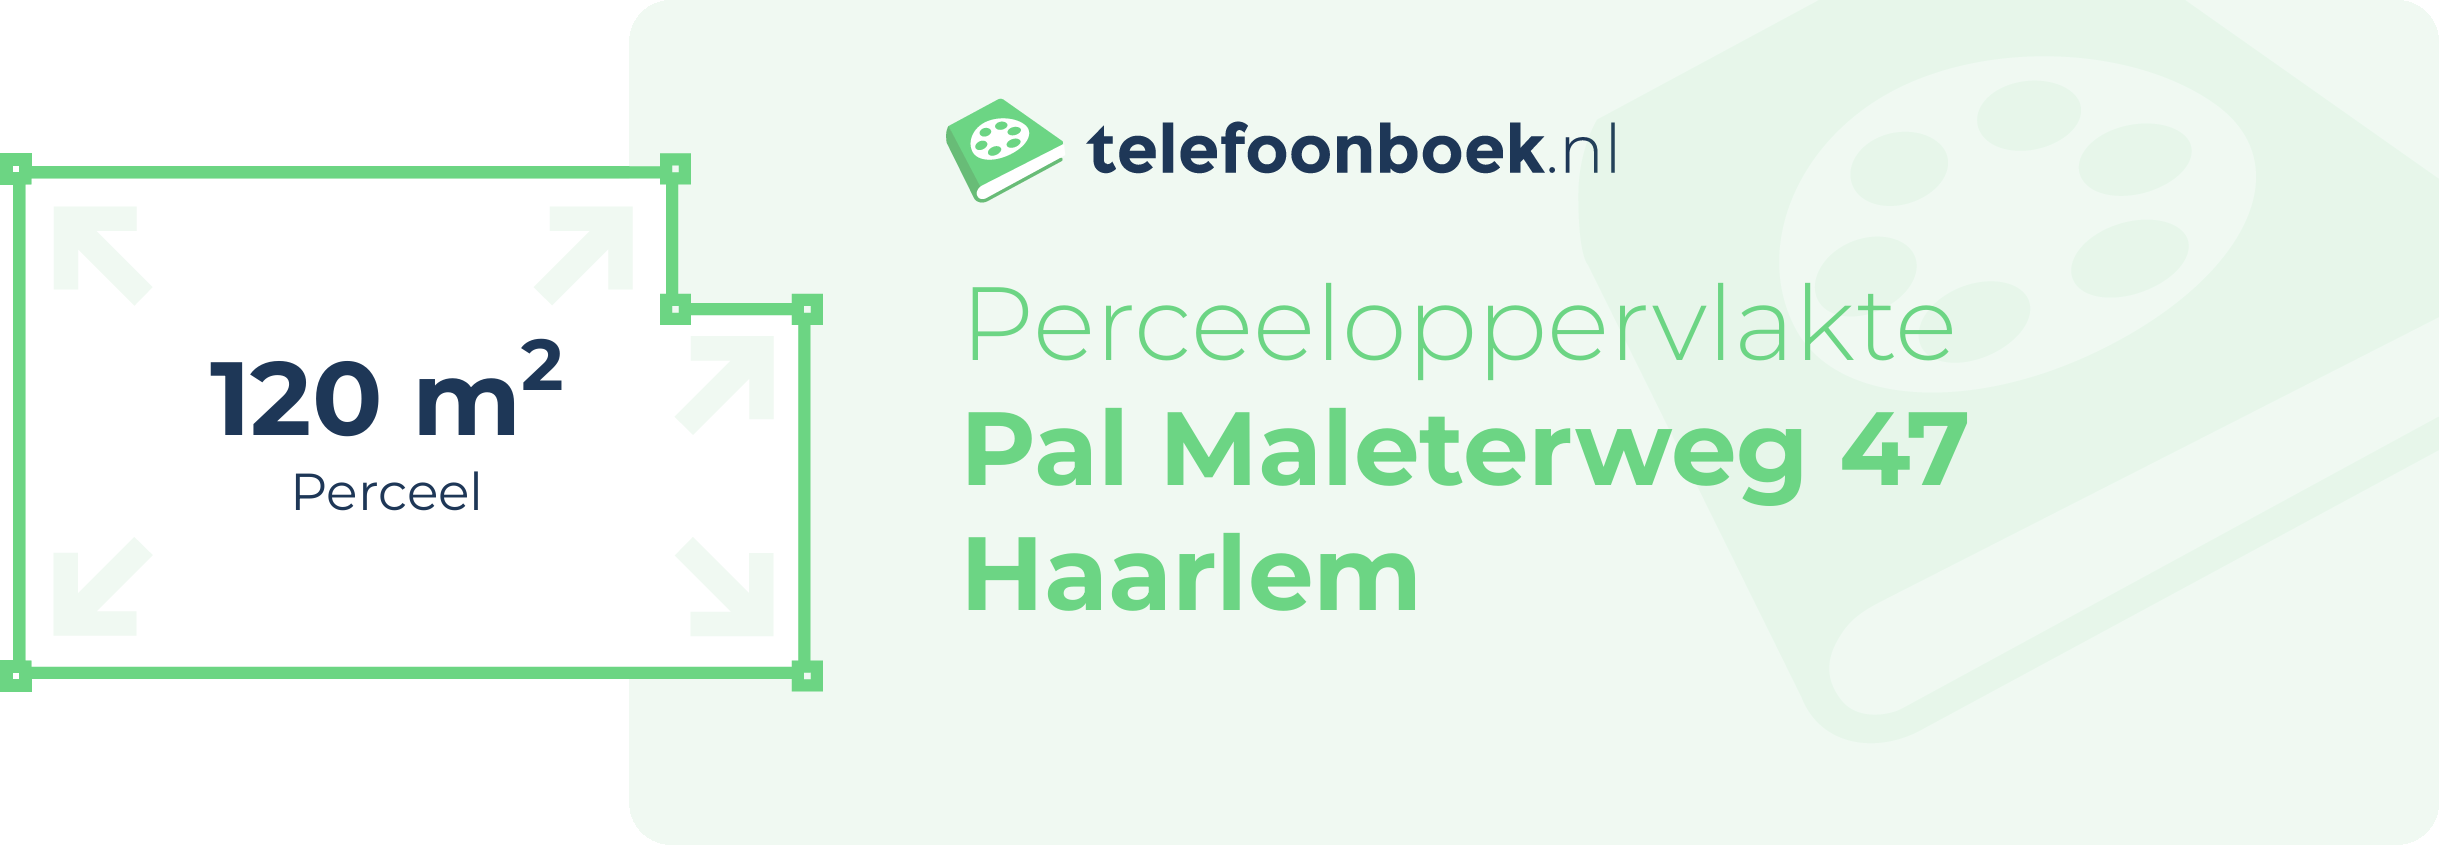 Perceeloppervlakte Pal Maleterweg 47 Haarlem